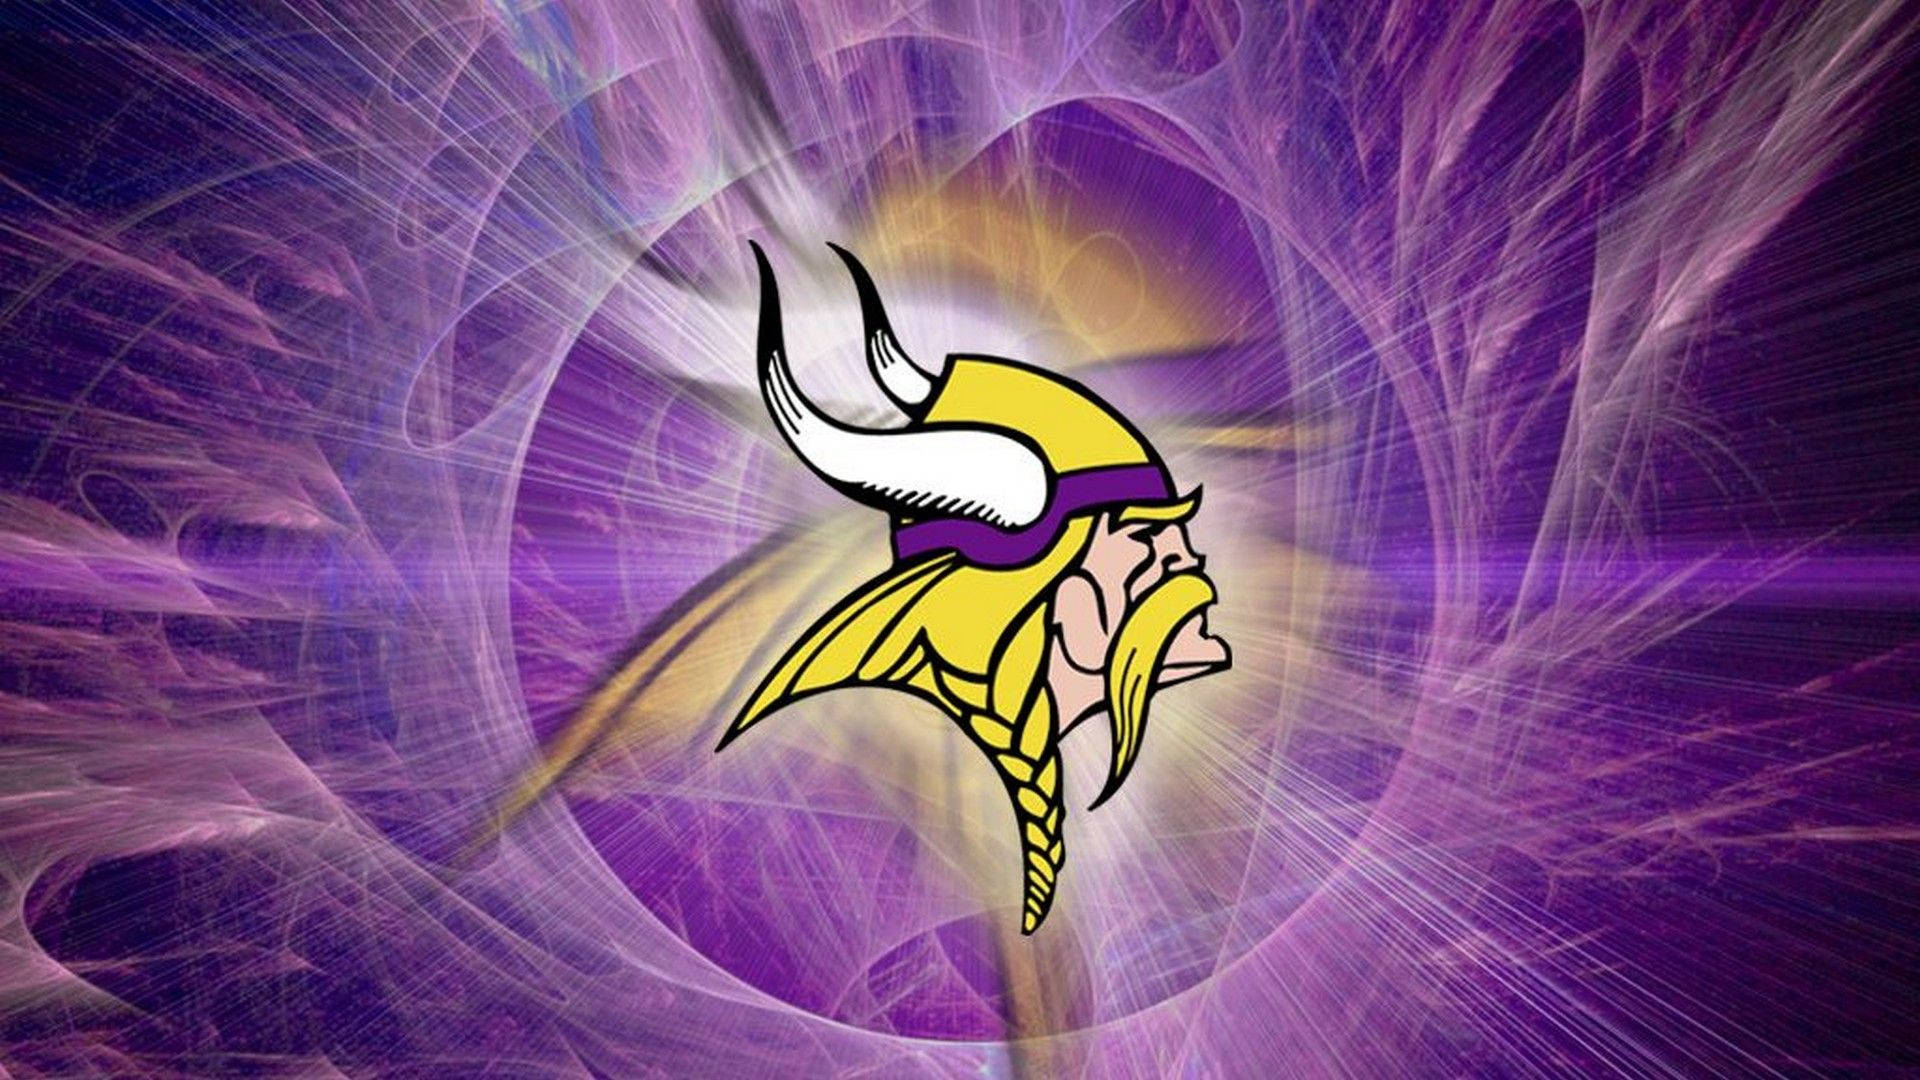 Download Illuminated Minnesota Vikings Logo Wallpaper | Wallpapers.com